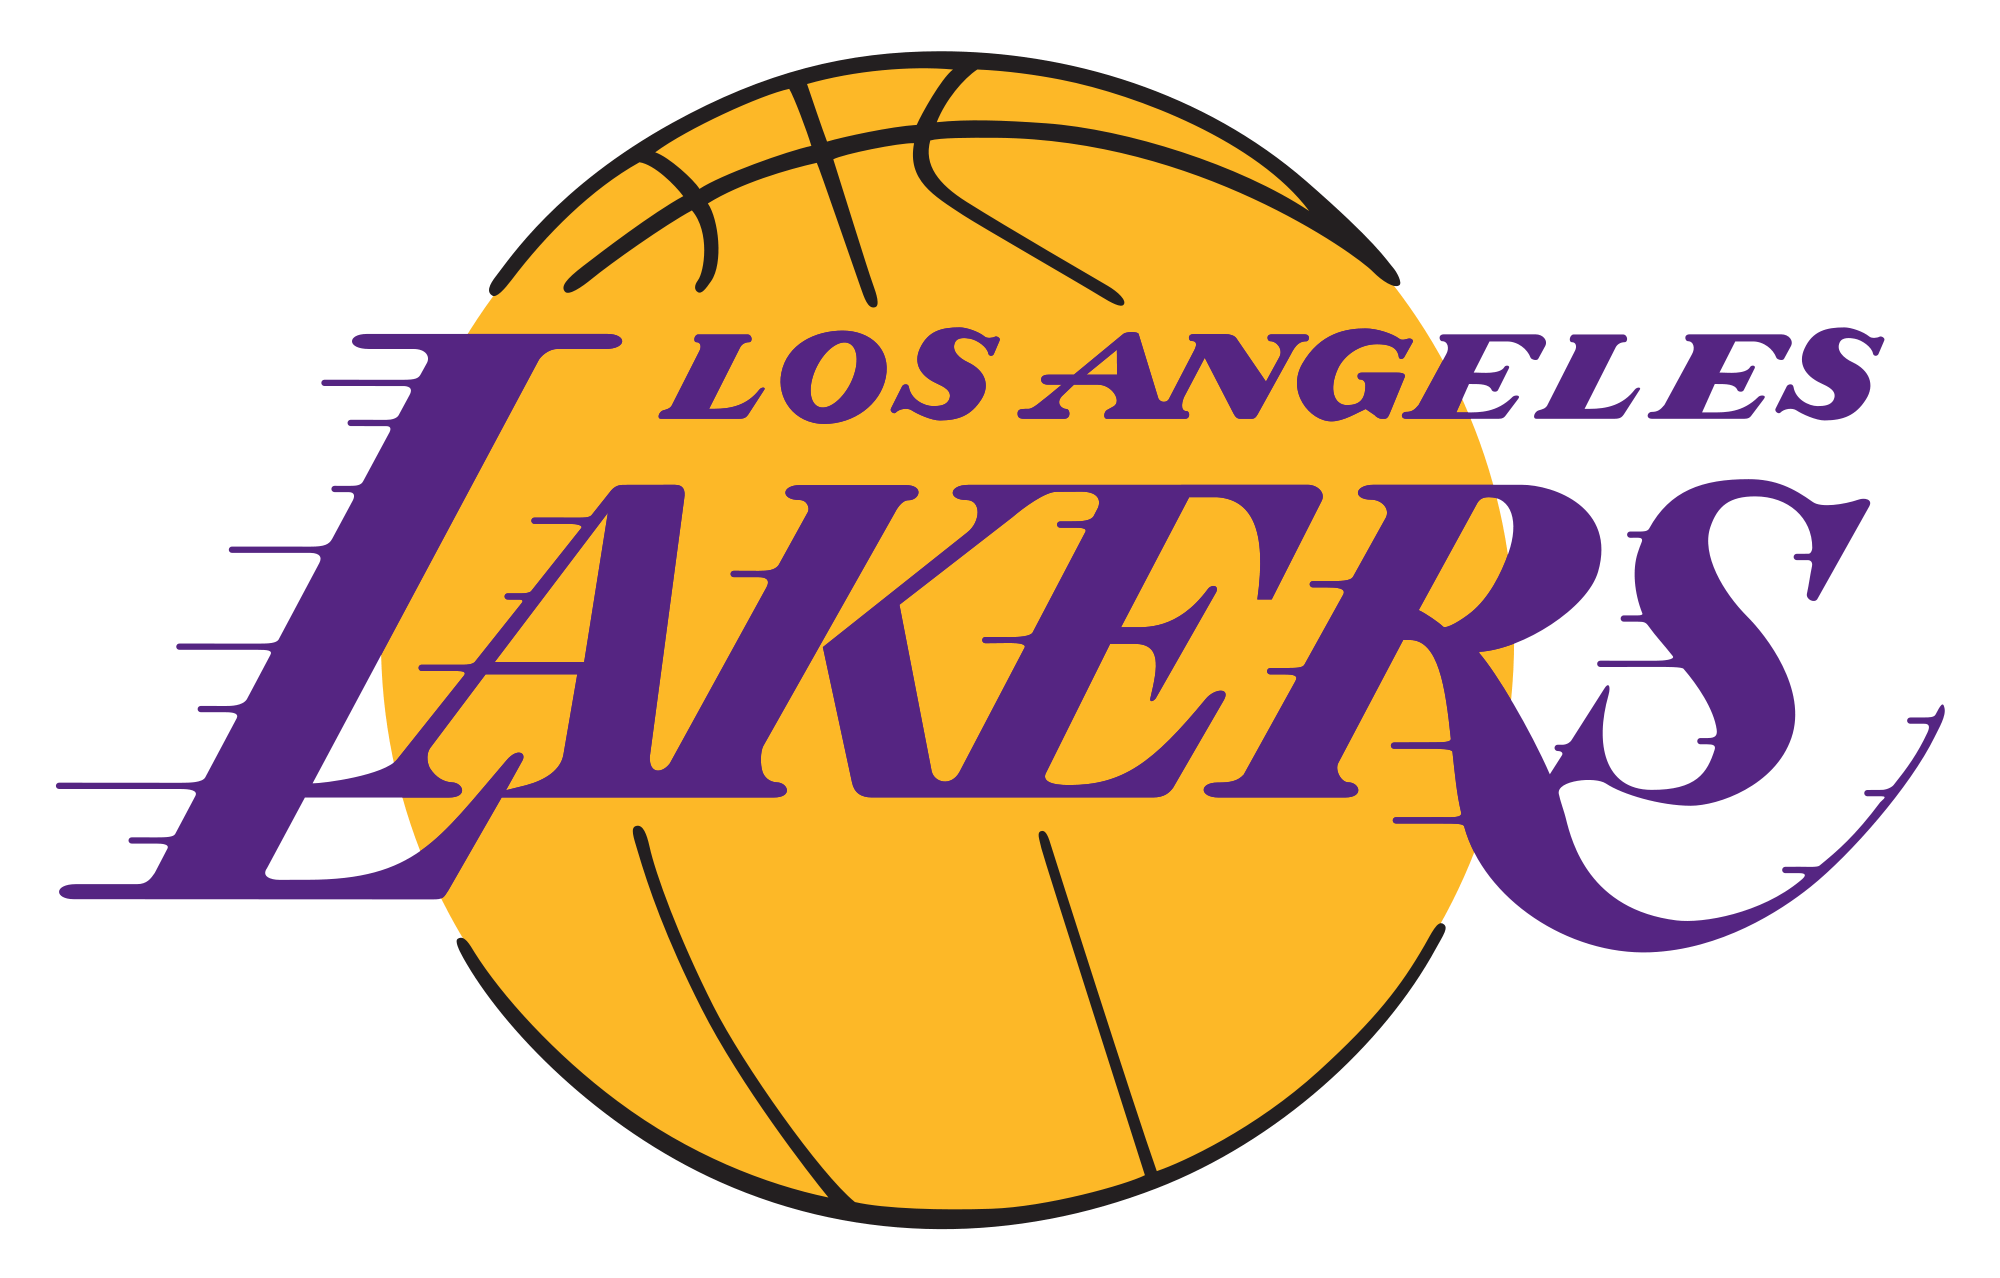 NBA Basketball Team Logo - NBA Team Logos Wallpapers 2016 - Wallpaper Cave